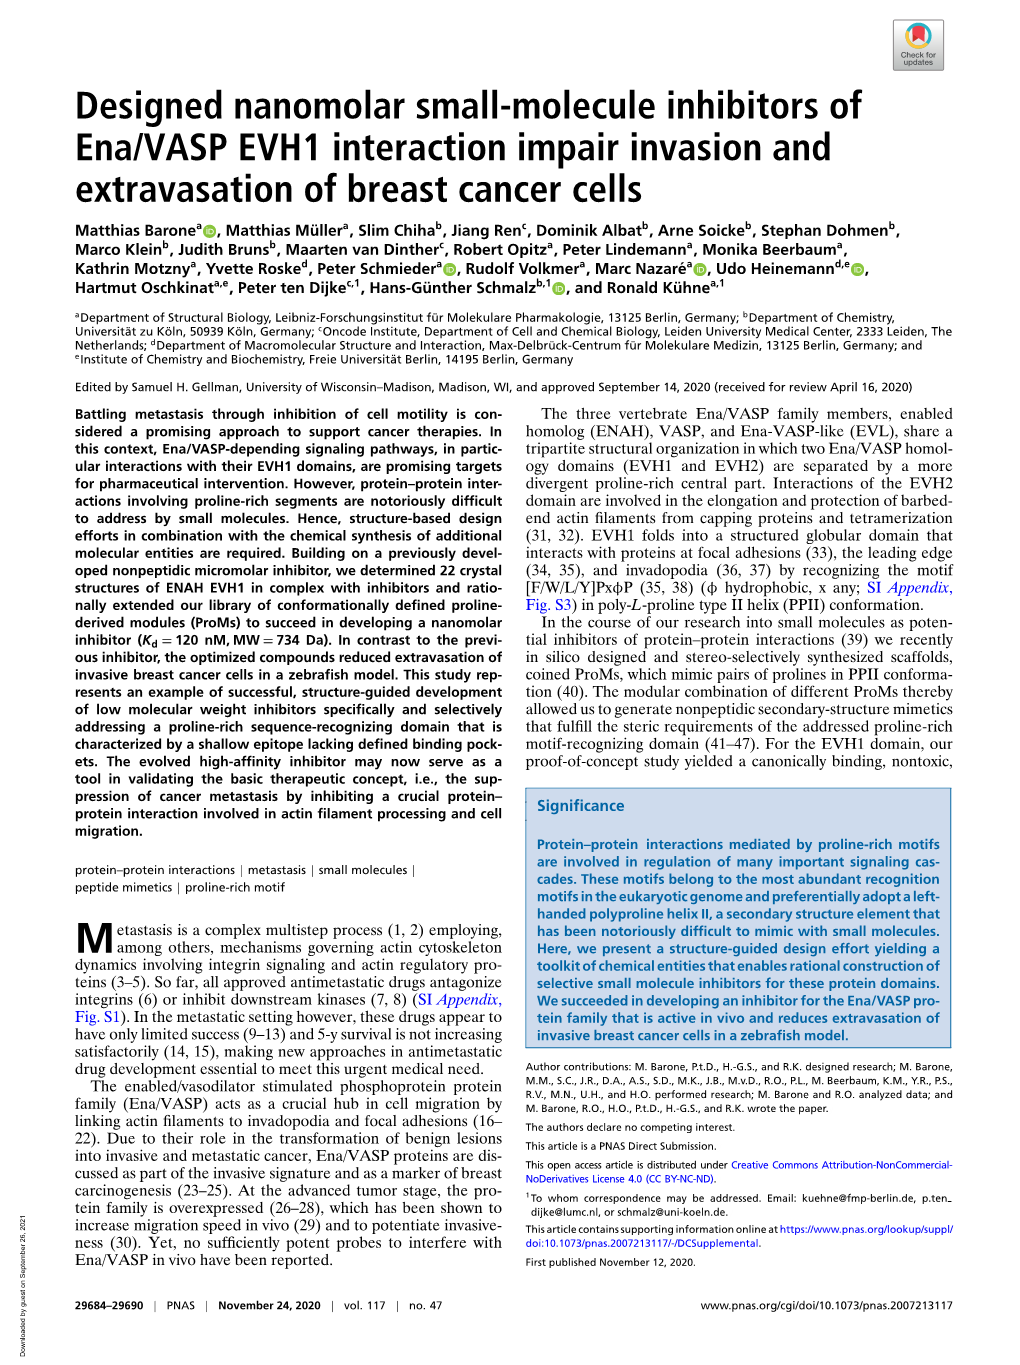 Designed Nanomolar Small-Molecule Inhibitors of Ena/VASP EVH1 Interaction Impair Invasion and Extravasation of Breast Cancer